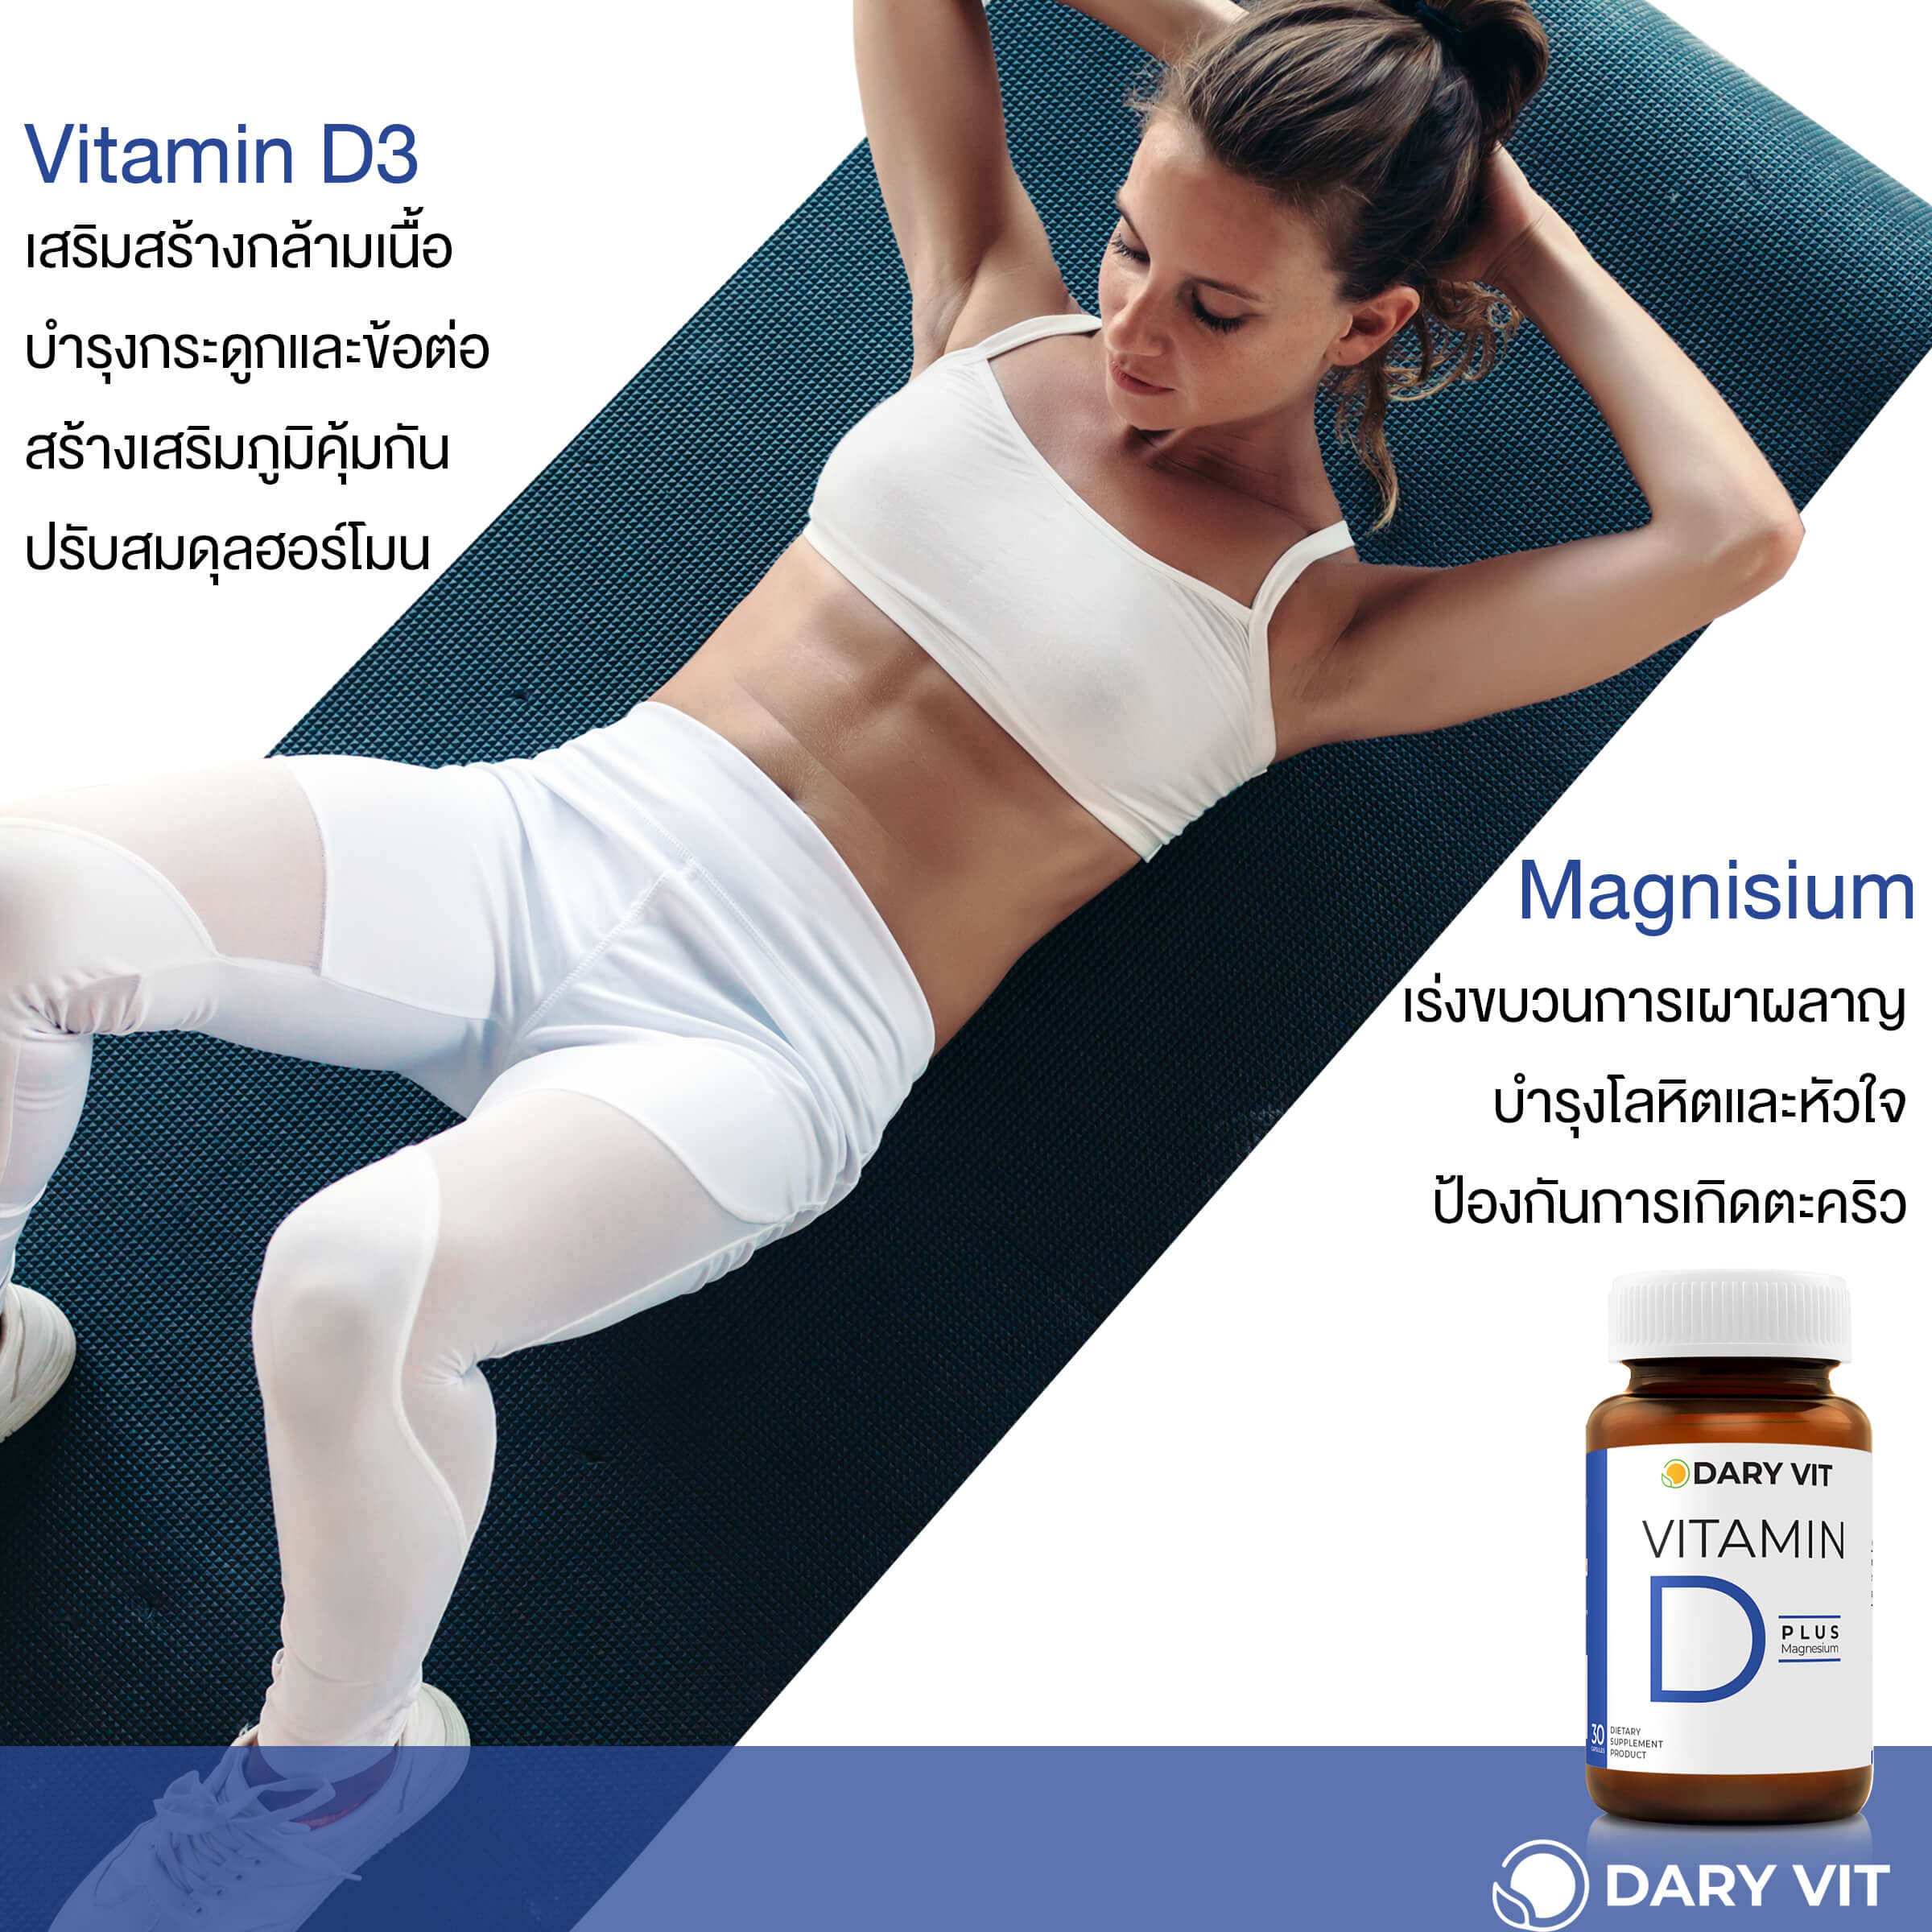 Dary Vit,Vitamin D,Dary Vit Vitamin D,Magnesium,วิตามินดี,วิตามินดี แมกนีเซียม